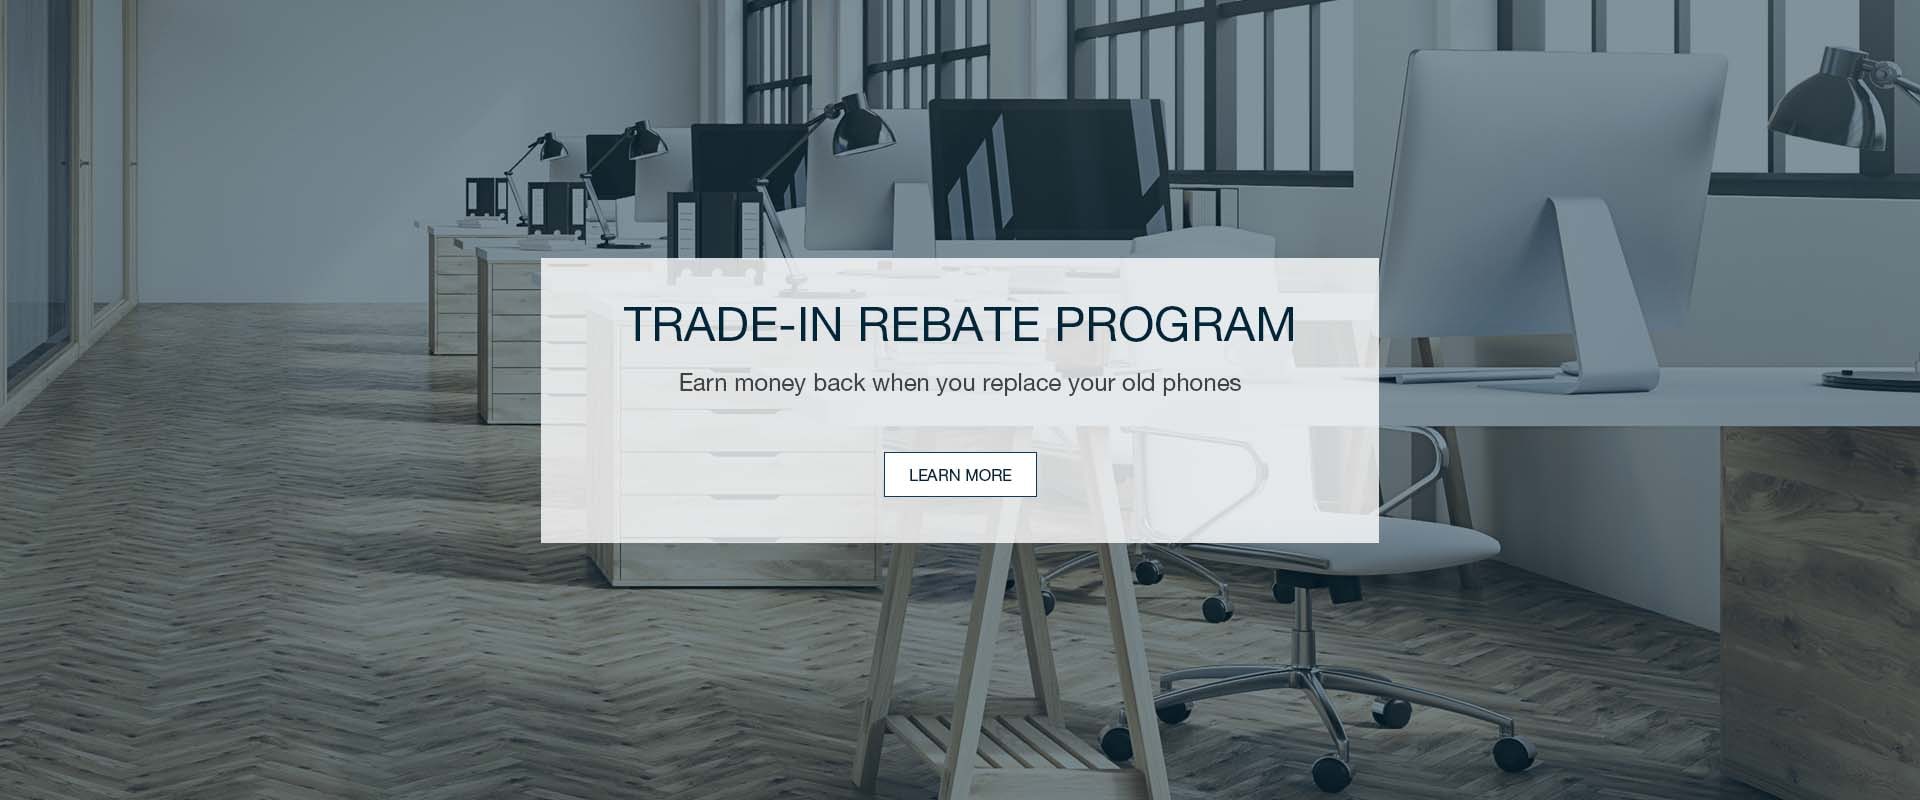 Trade-In Rebate Program